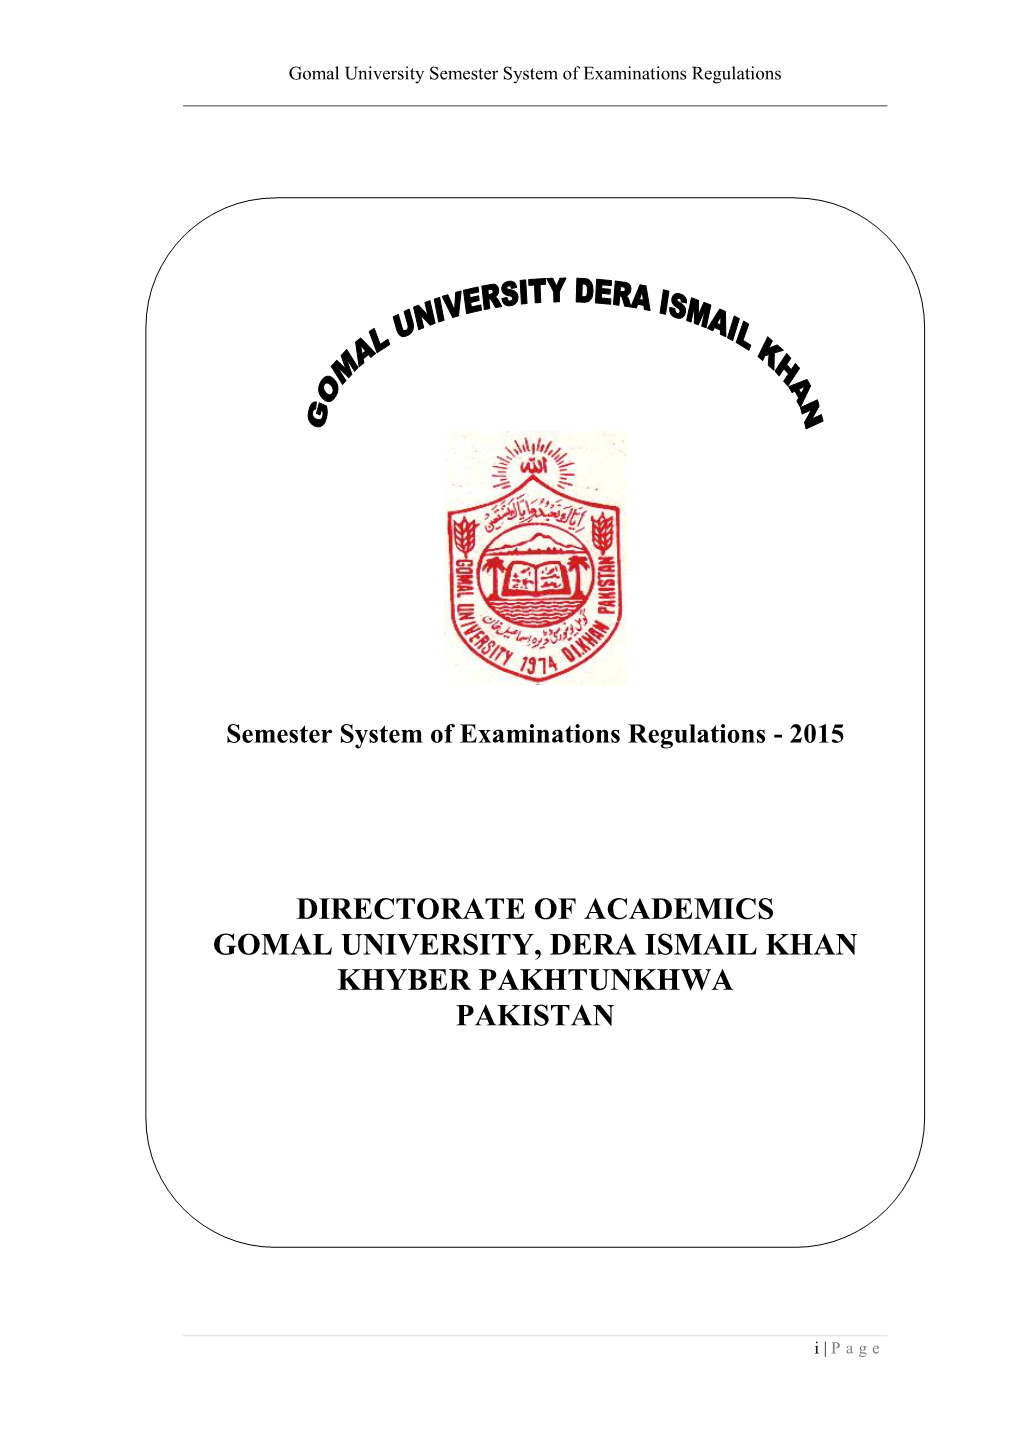 Directorate of Academics Gomal University, Dera Ismail Khan Khyber Pakhtunkhwa Pakistan